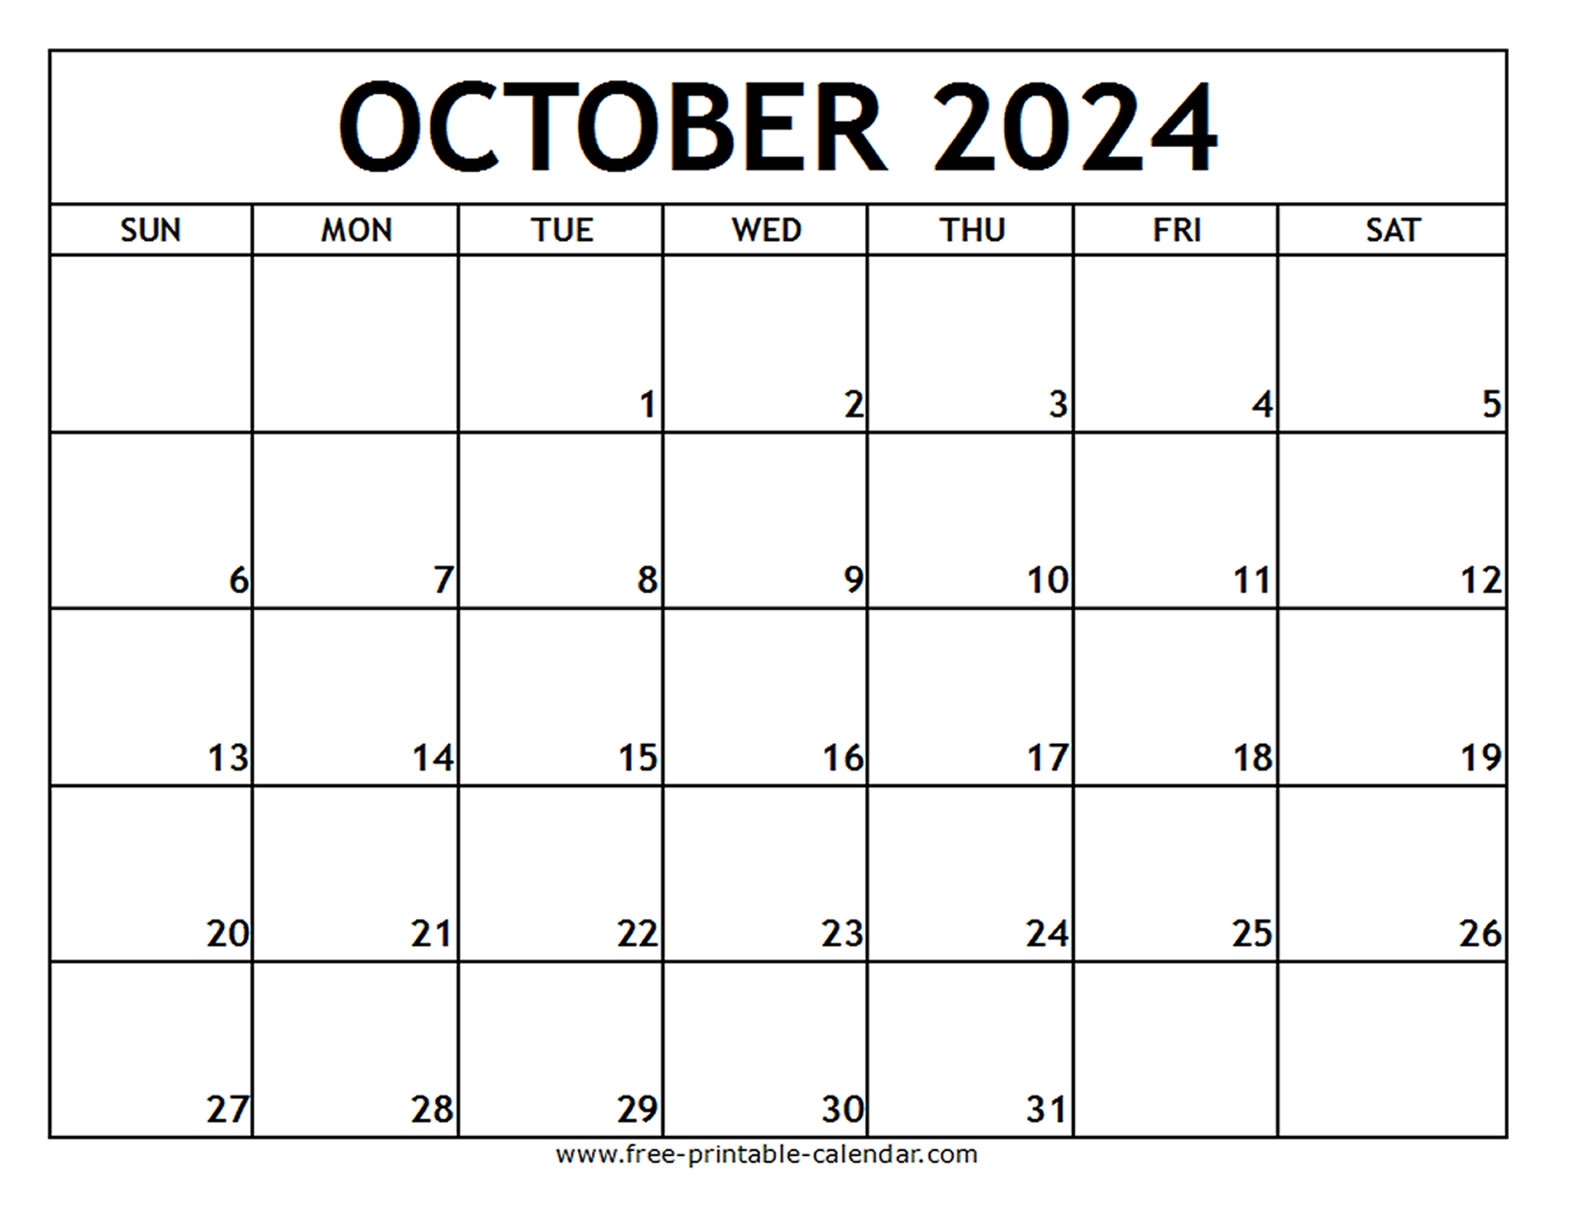 October 2024 Printable Calendar - Free-Printable-Calendar regarding Free Printable Calendar 2024 October November December